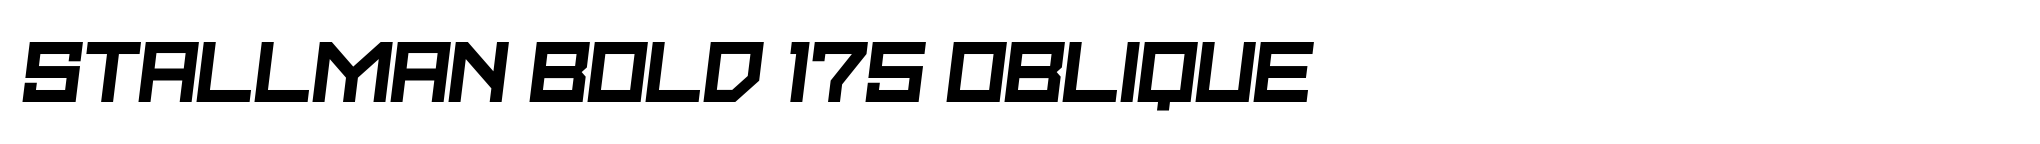 Stallman Bold 175 Oblique image